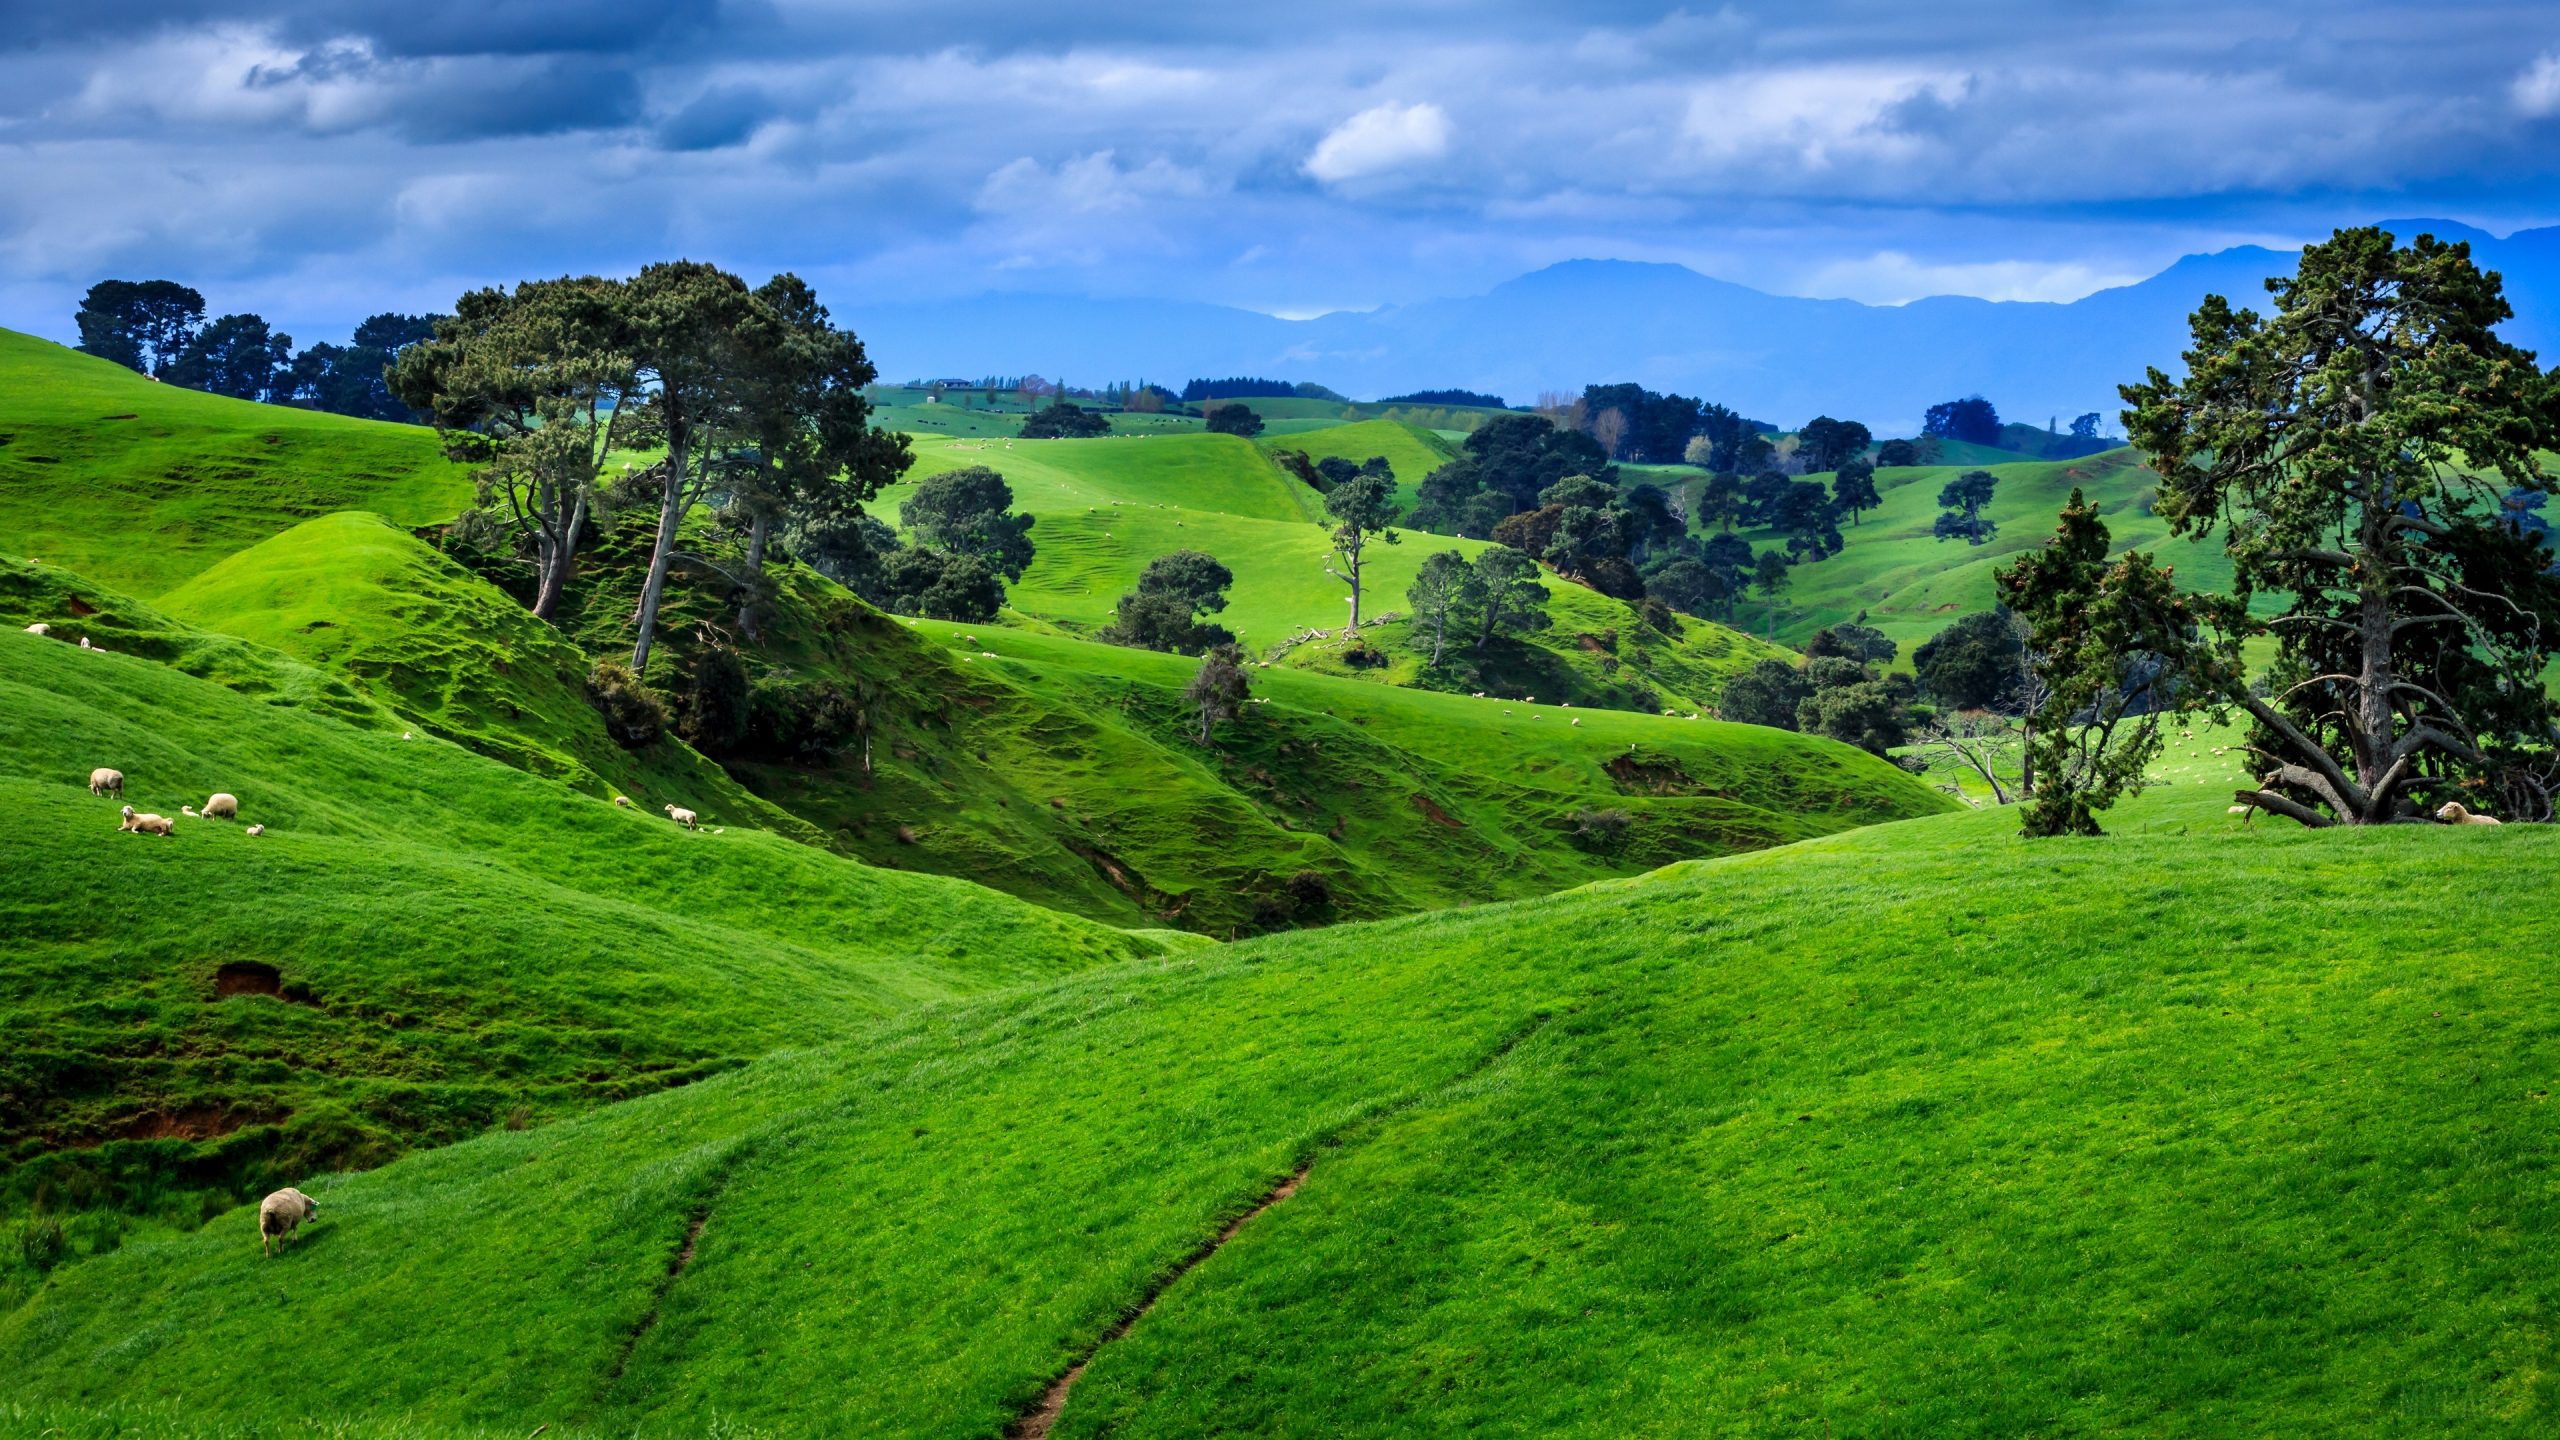 Kiwi Thrills the Overseas Adventure Travel in New Zealand